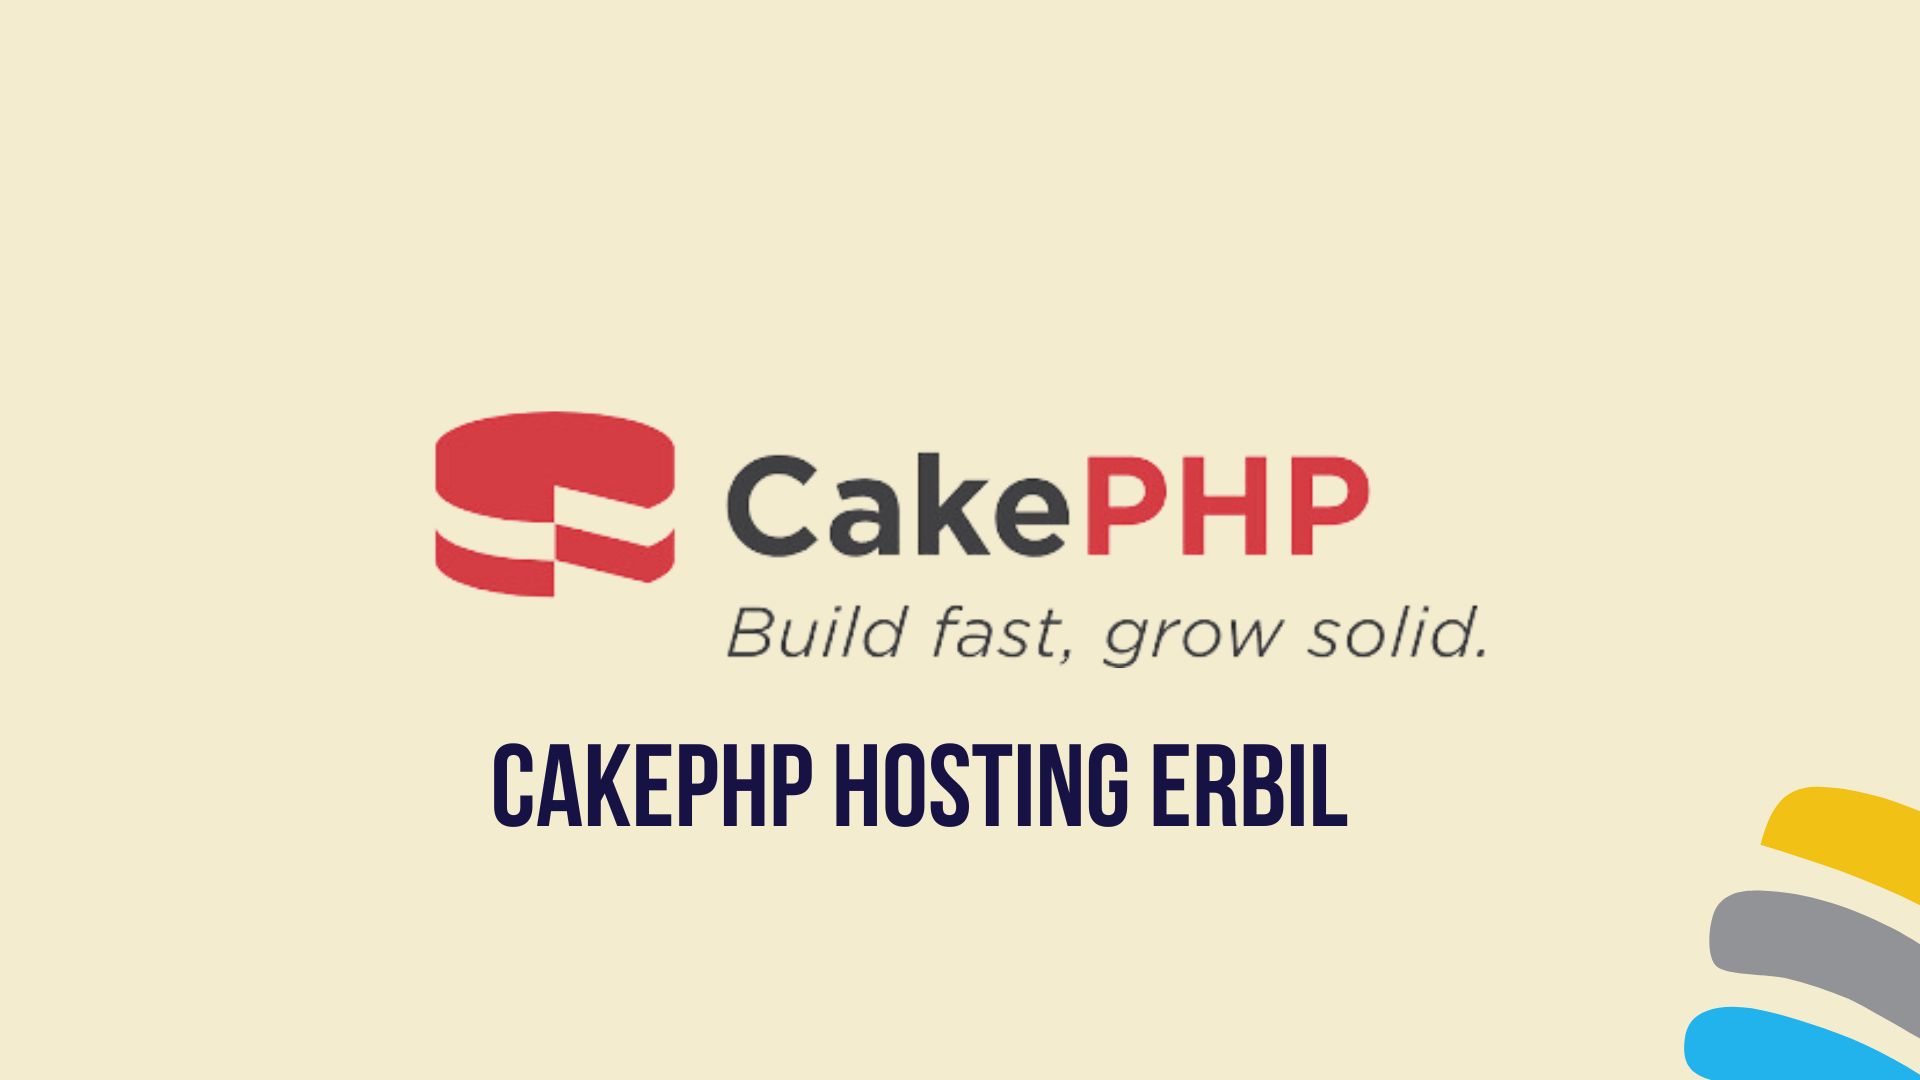 CakePHP Hosting in Erbil Made Easy with Linkdata.com VPS